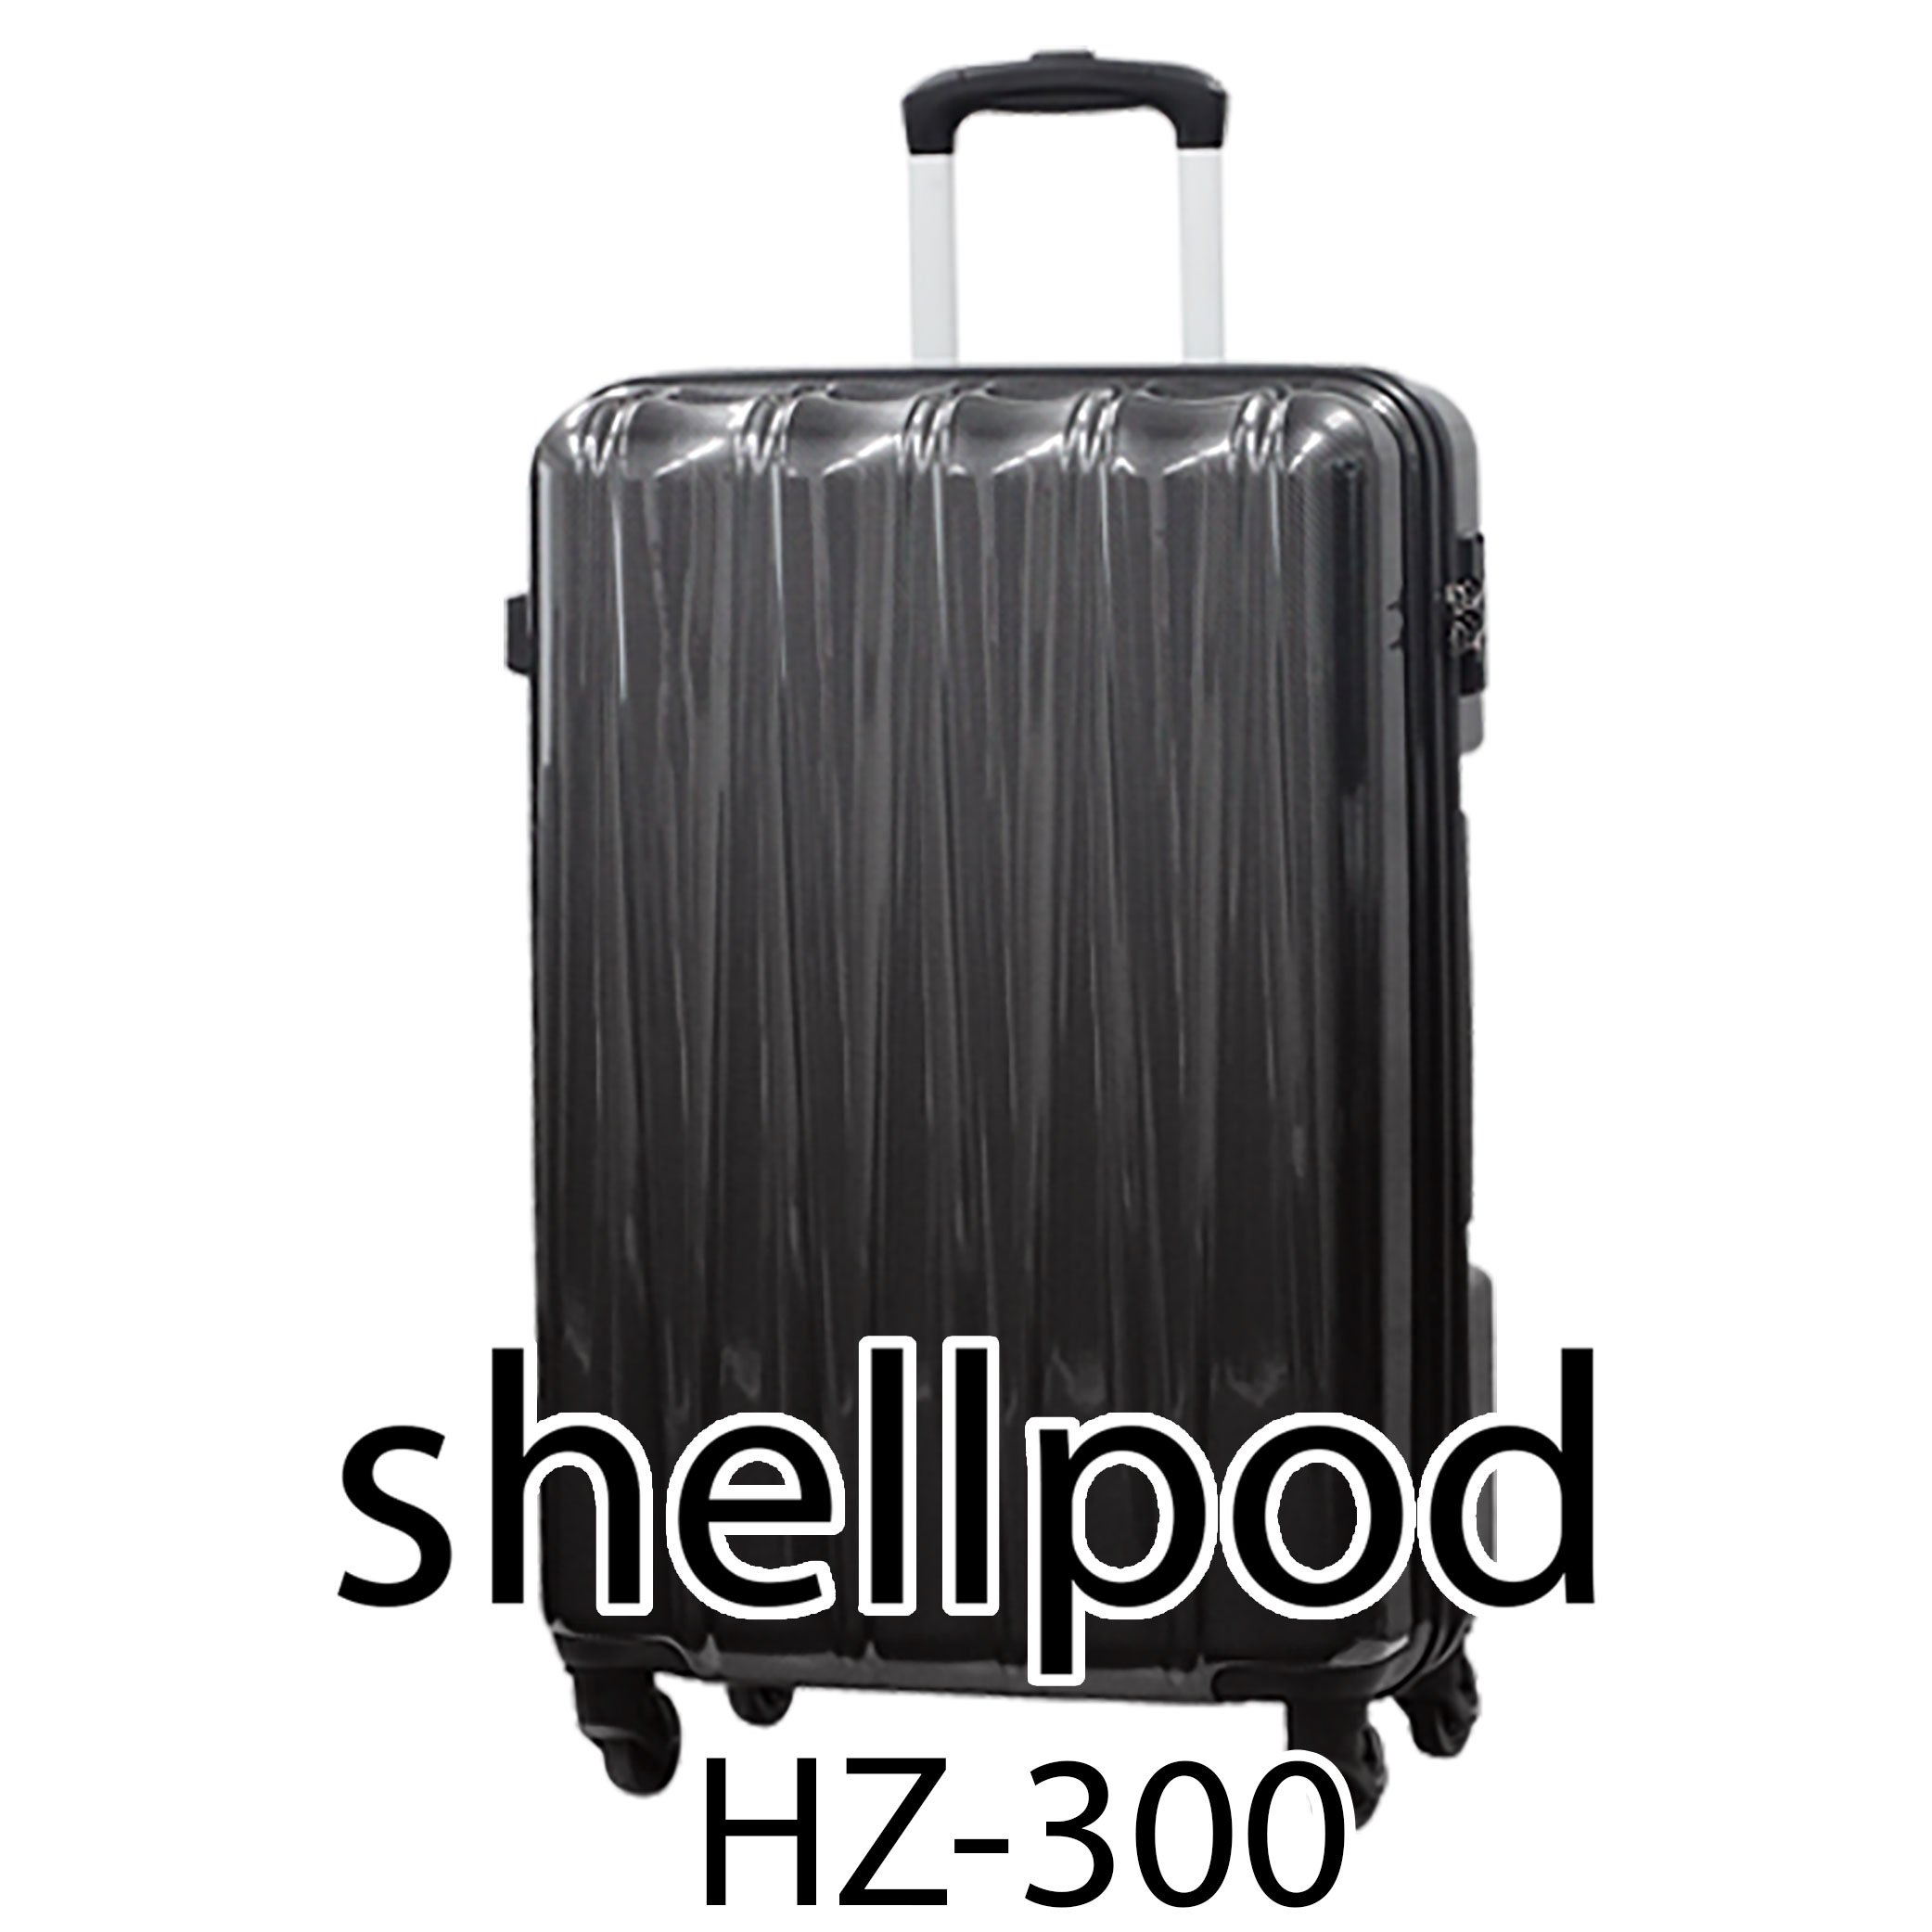 shellpod HZ-300